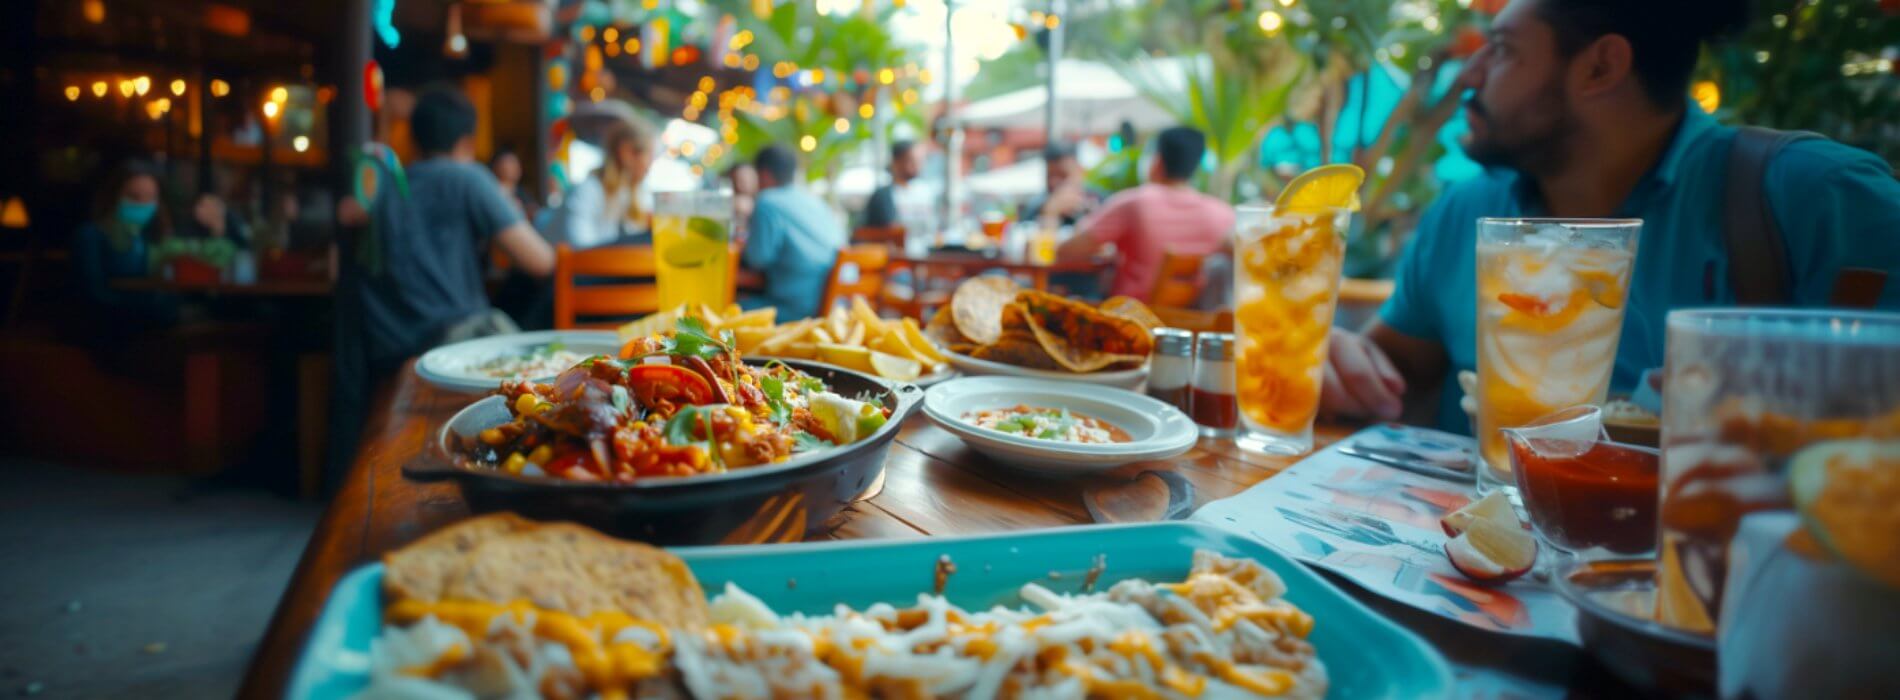 La primer guia de restaurantes michelin en mexico encabezado